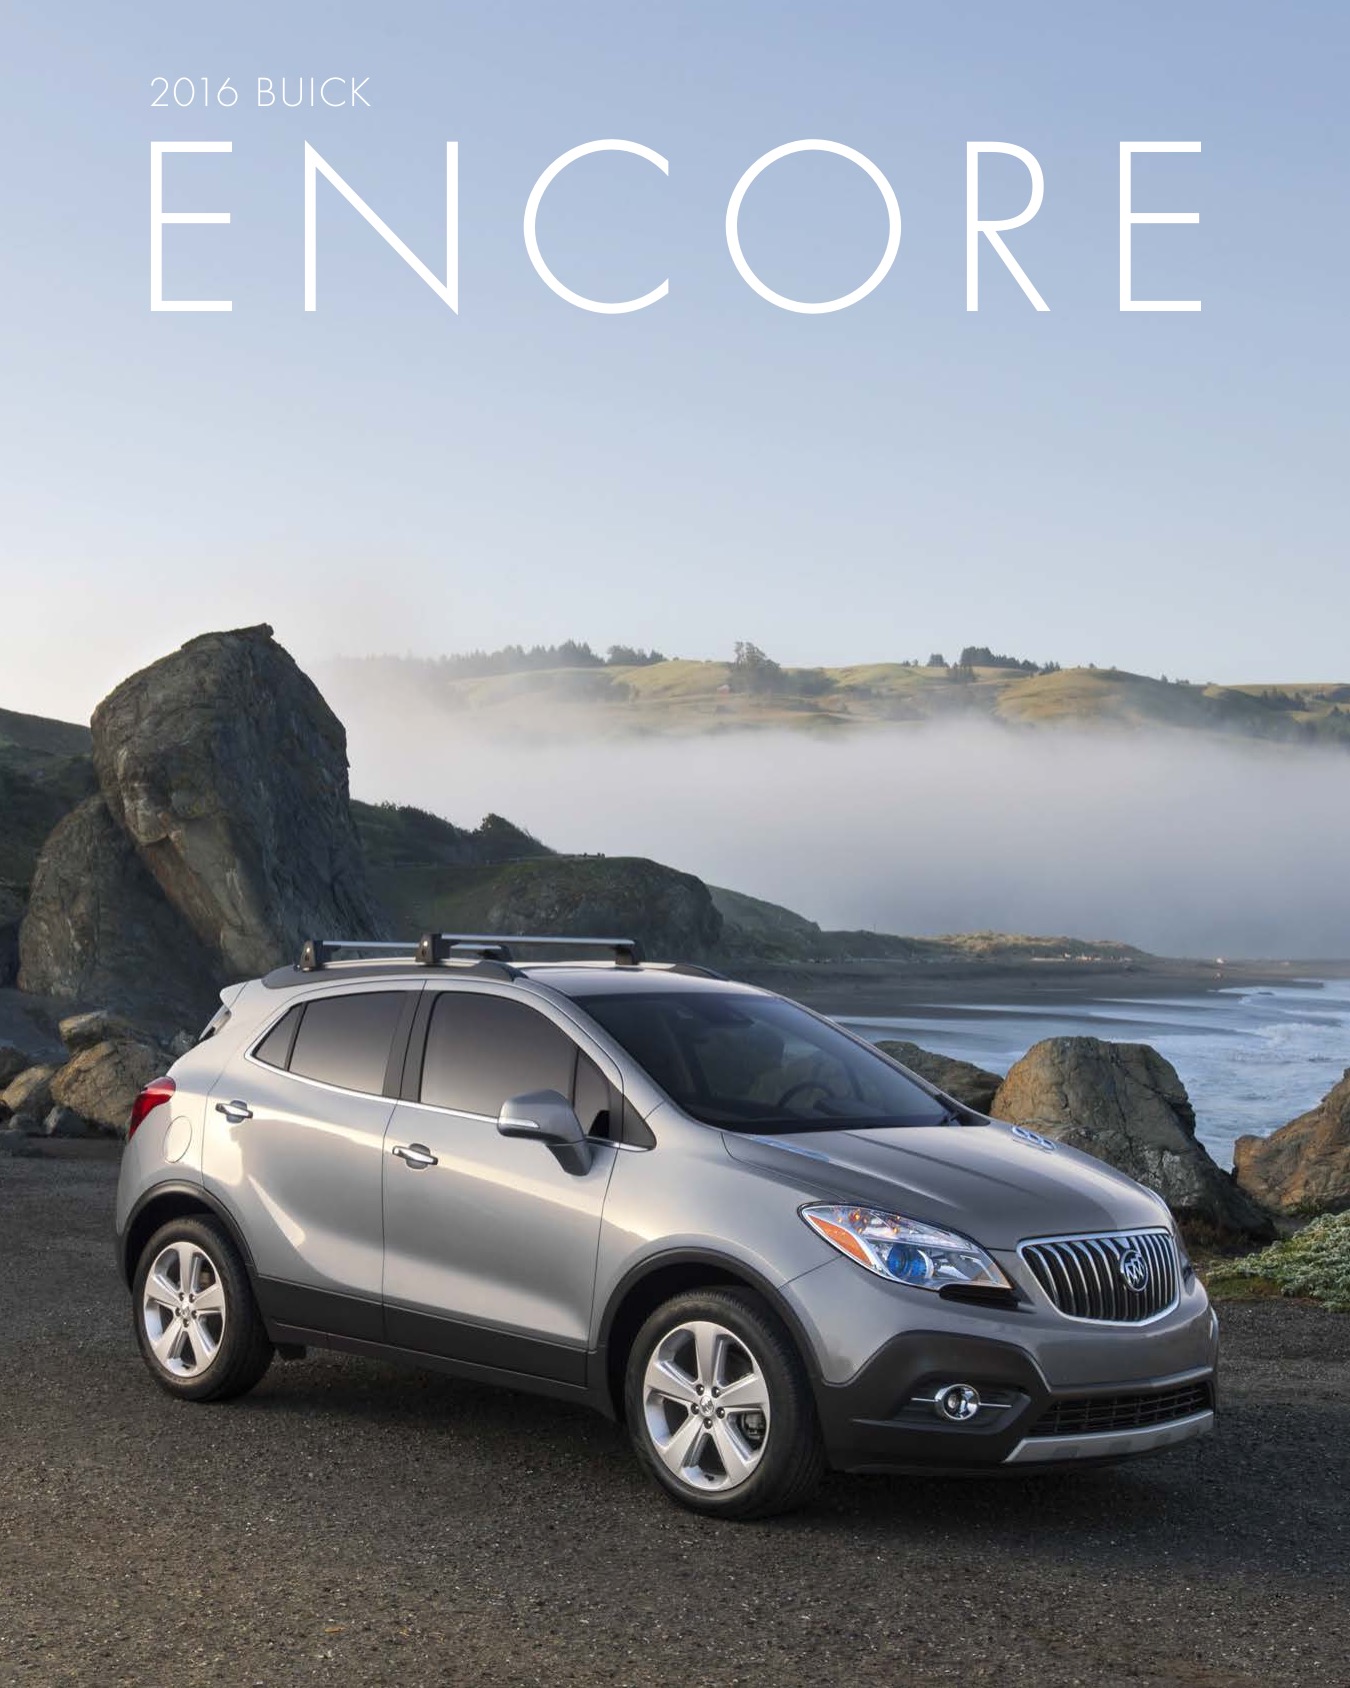 2016 Buick Encore Brochure